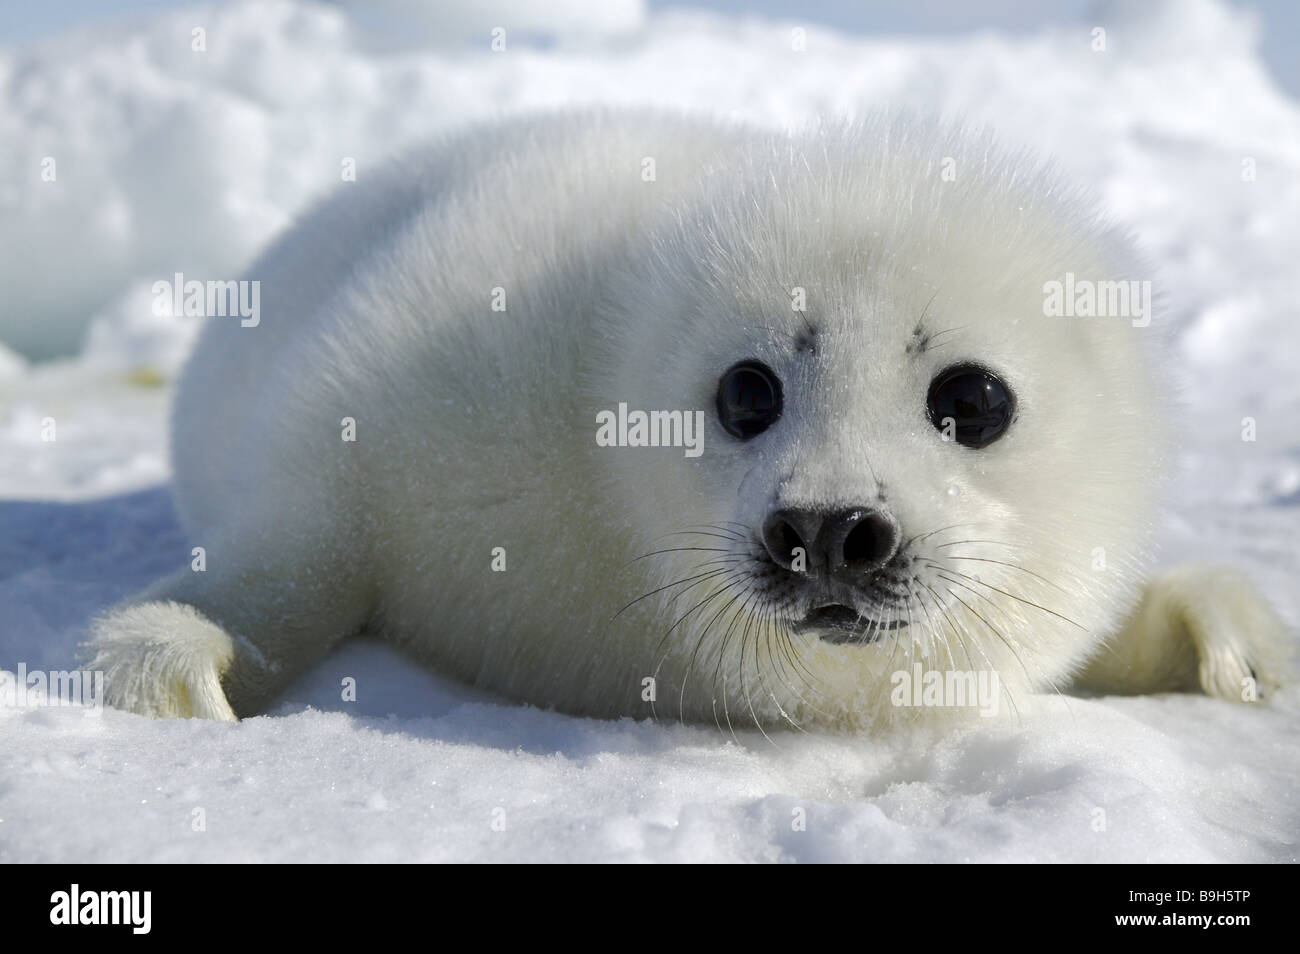 Seal baby Baby Seal